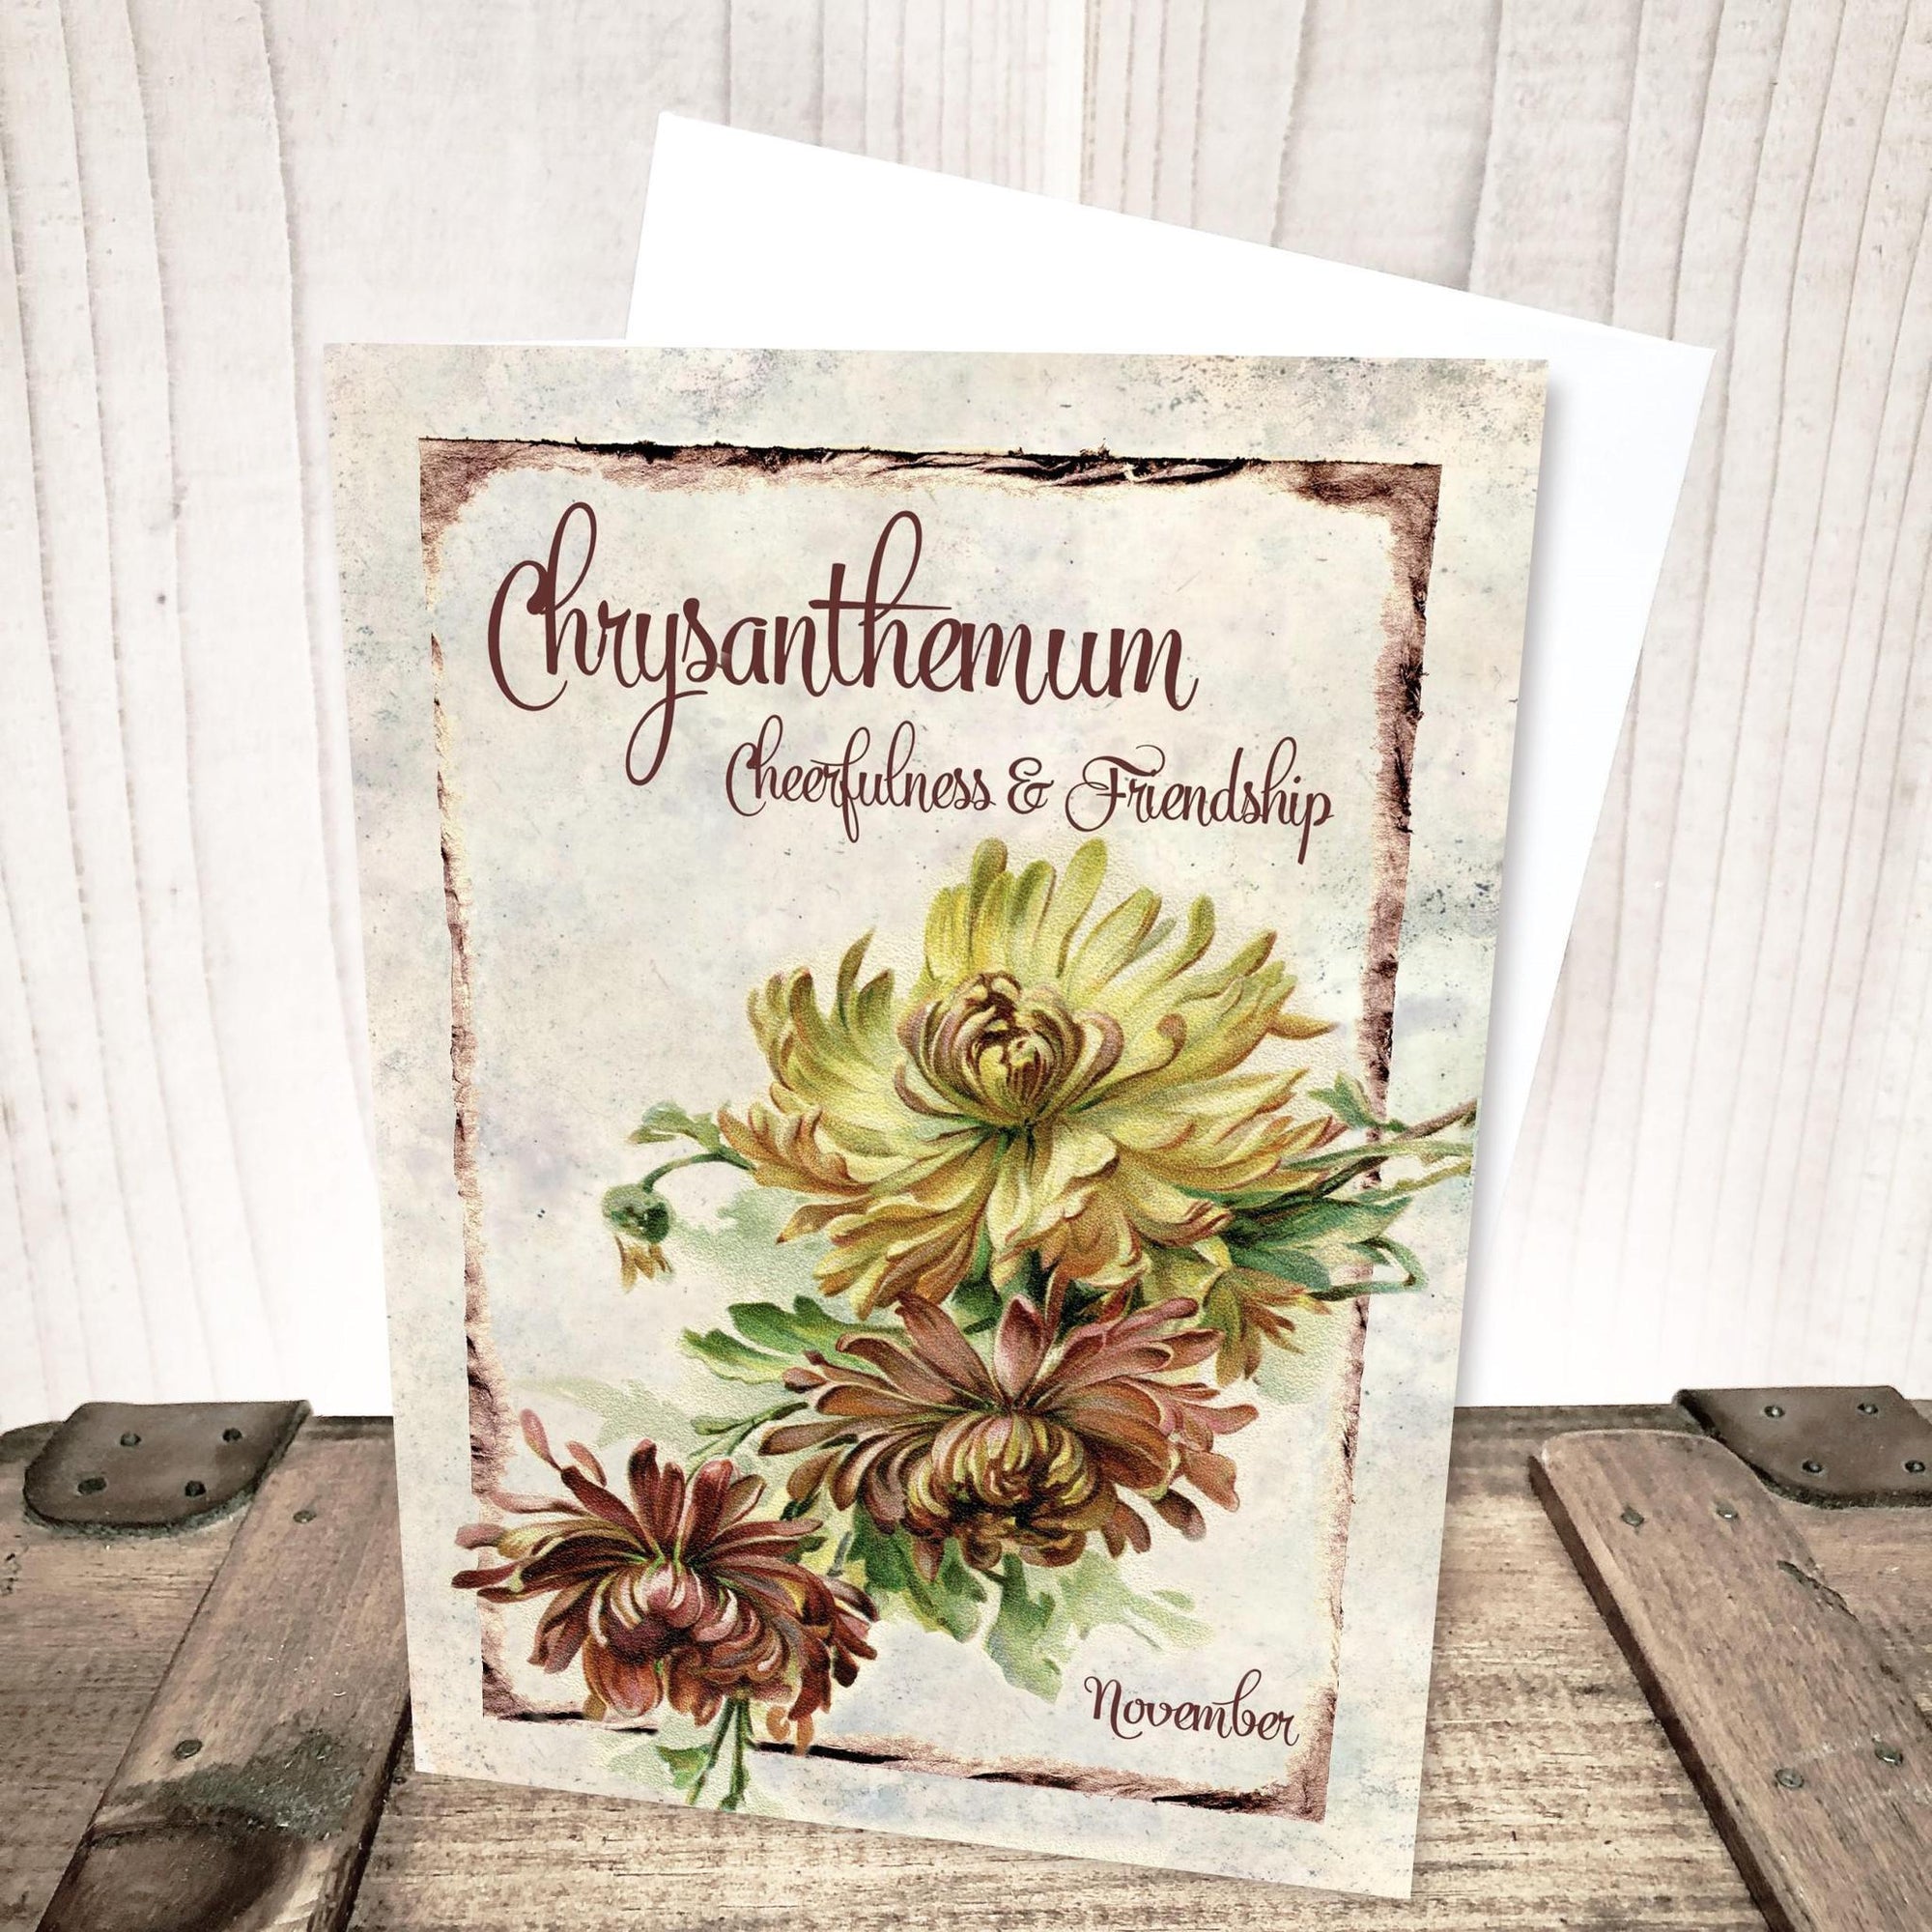 November Chrysanthemum Flower Card by Yesterday's Best